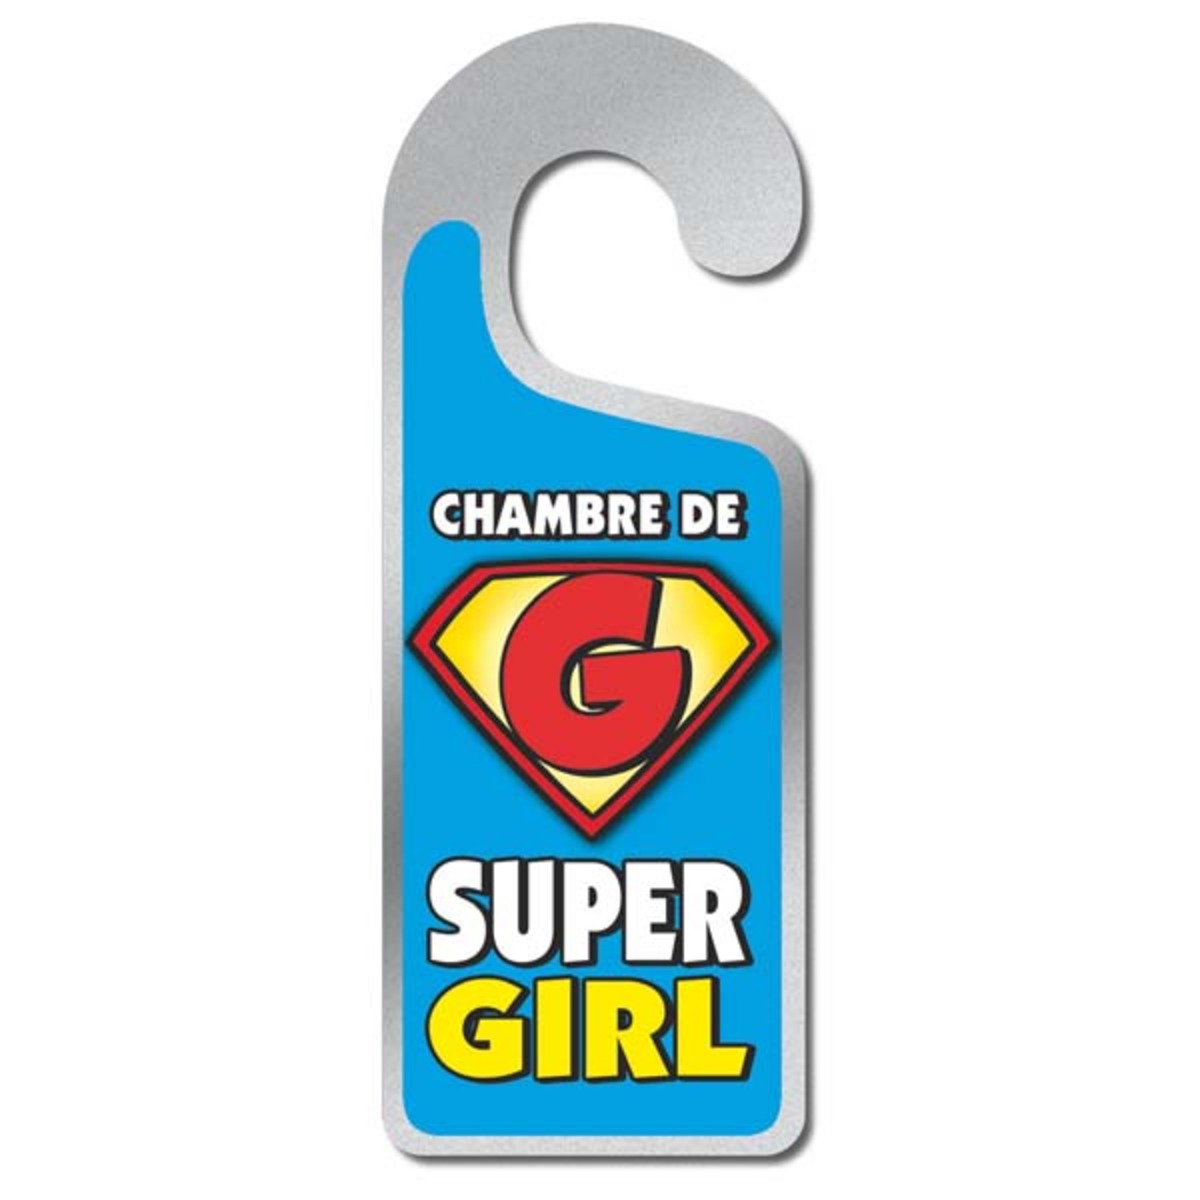 Plaque de porte - Chambre de super girl - 8 x 20 cm